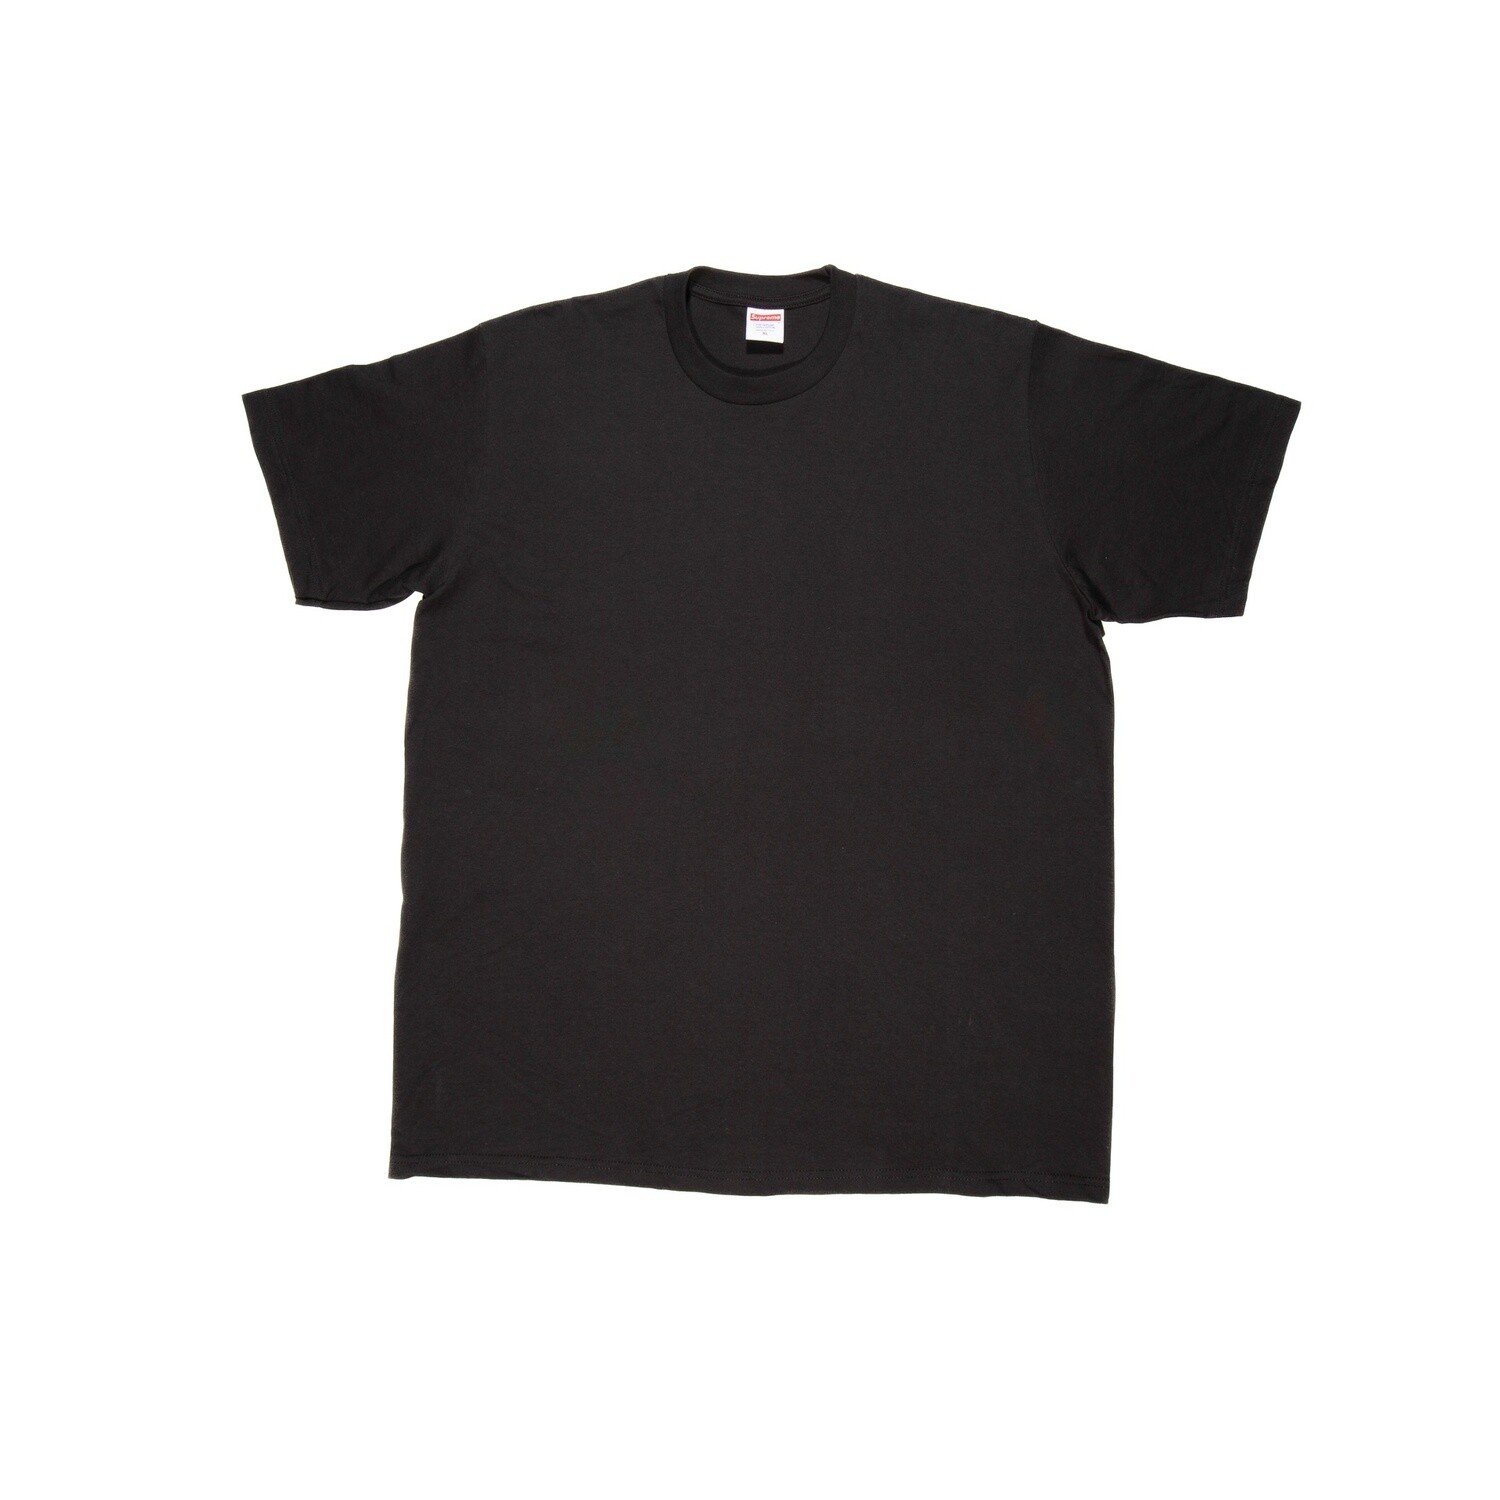 Supreme Blank T-shirt, Colour: Noir, Size: Small